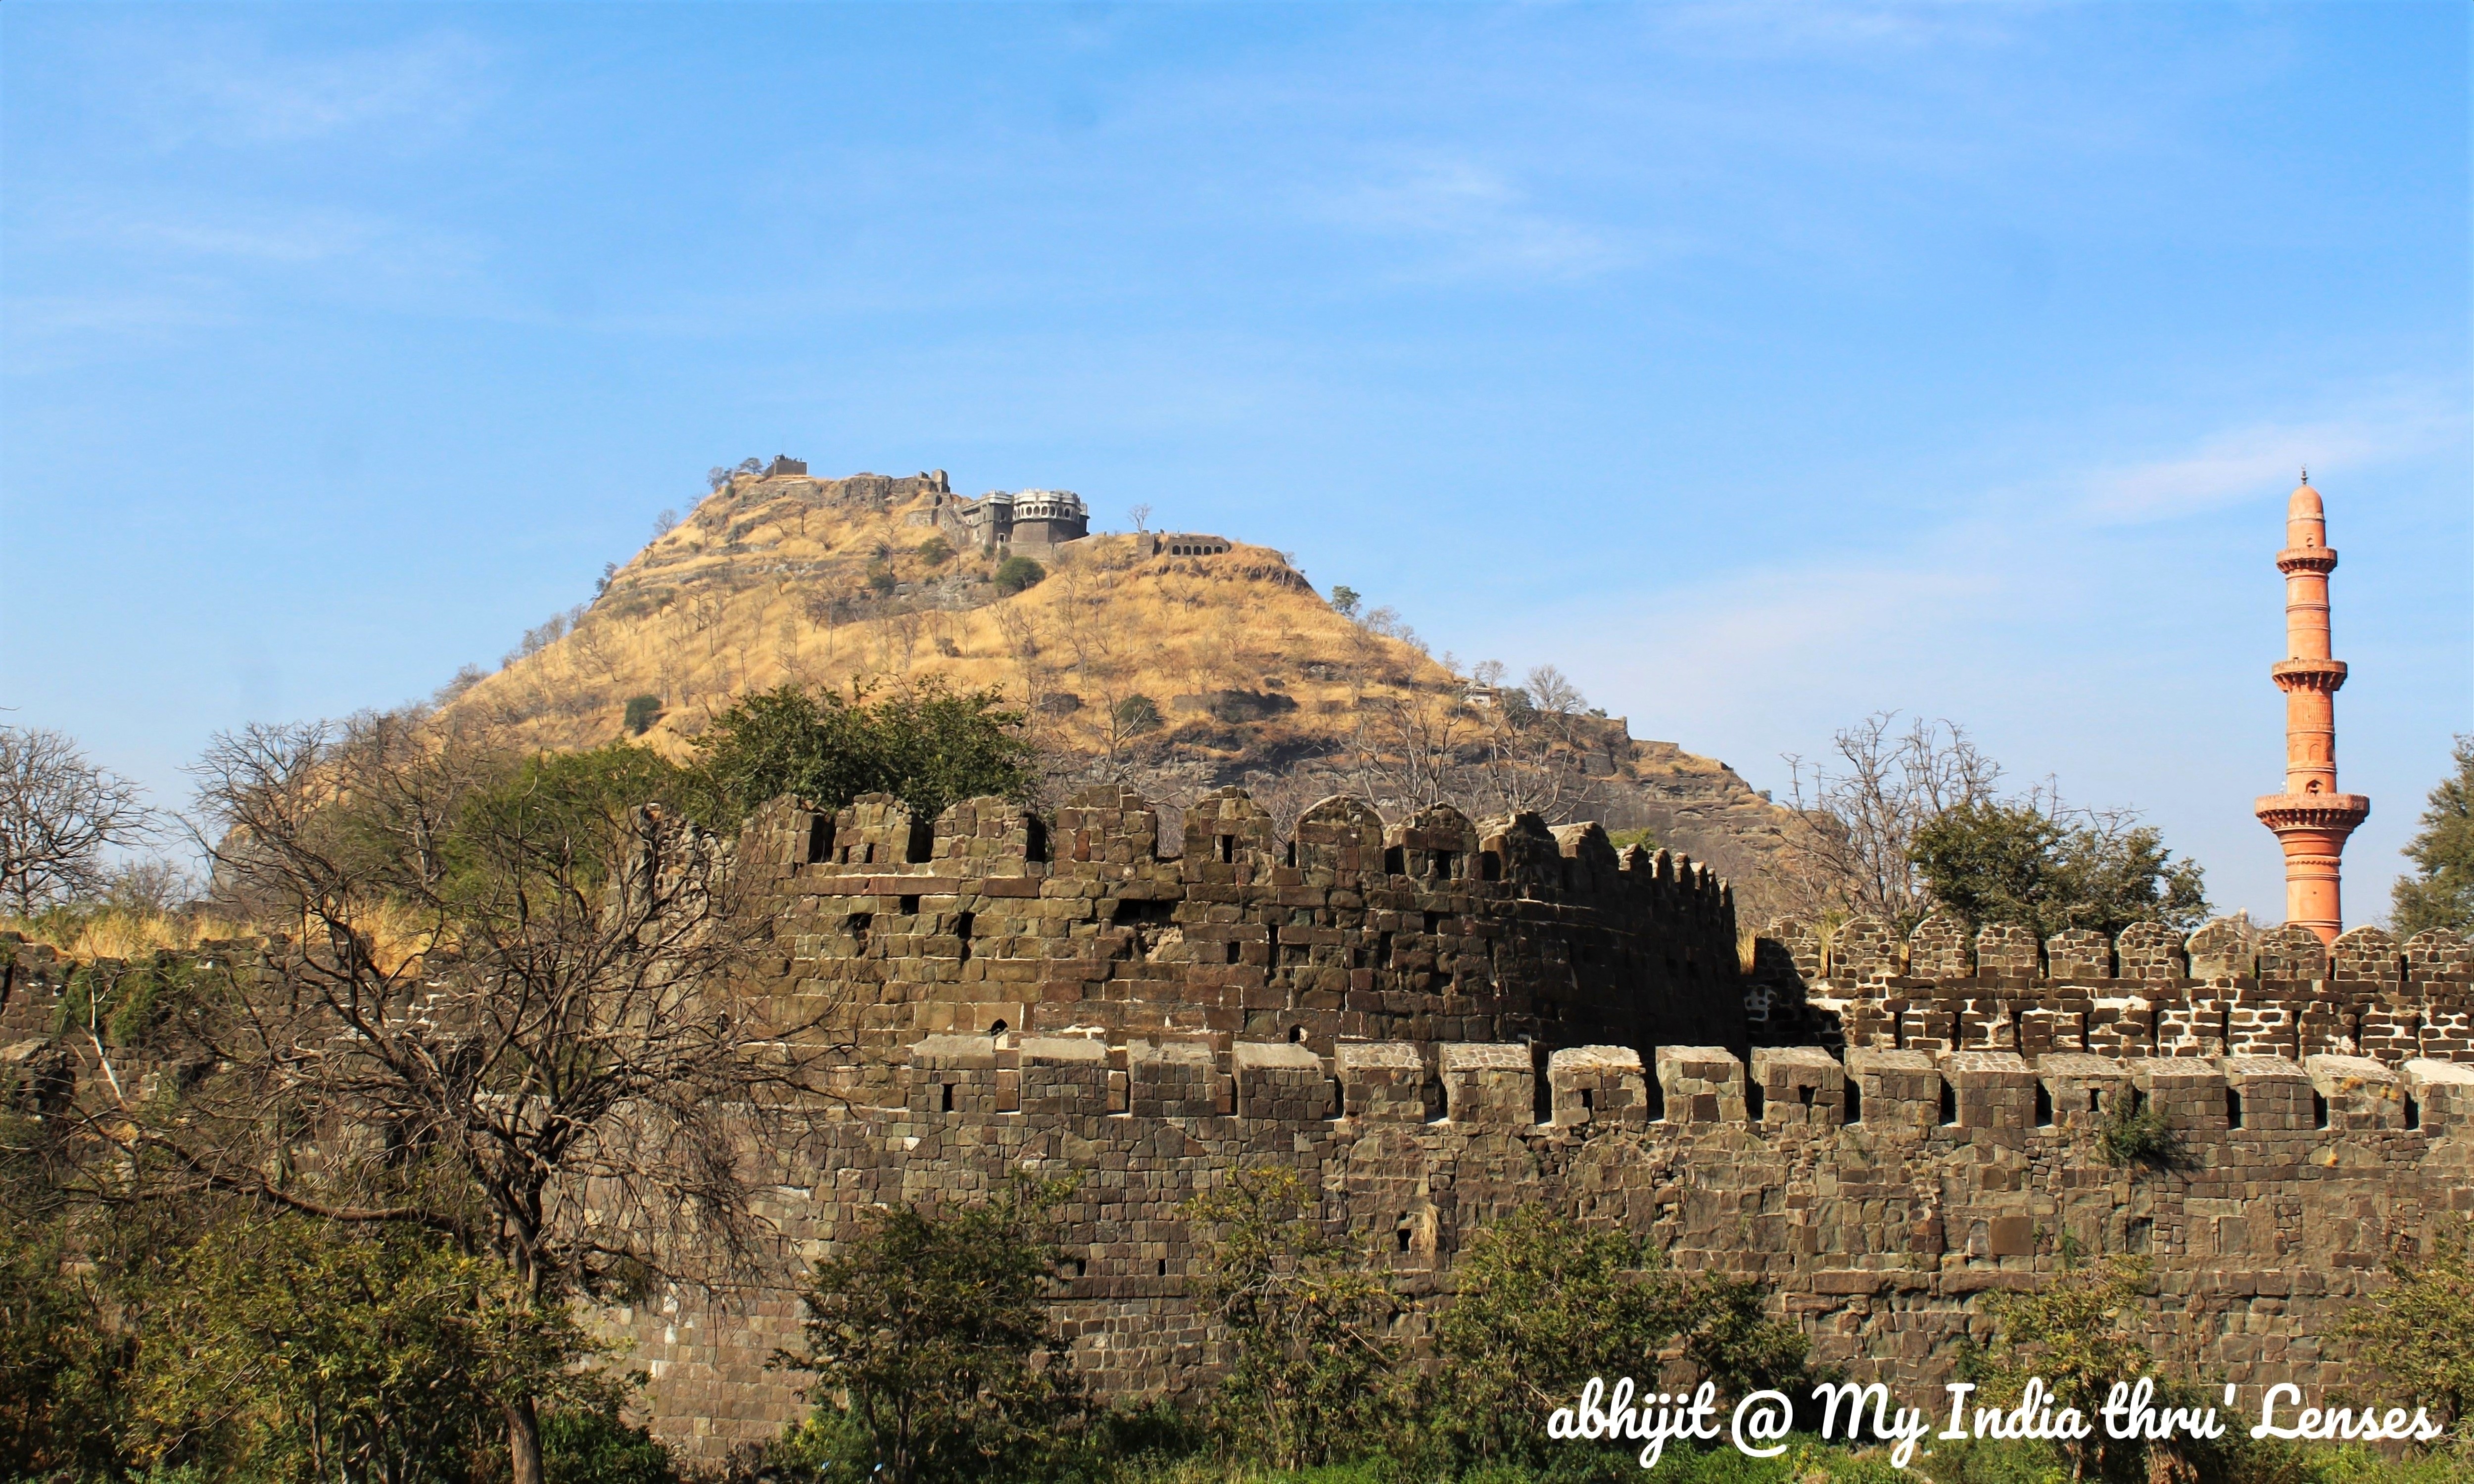 The Daulatabad Fort